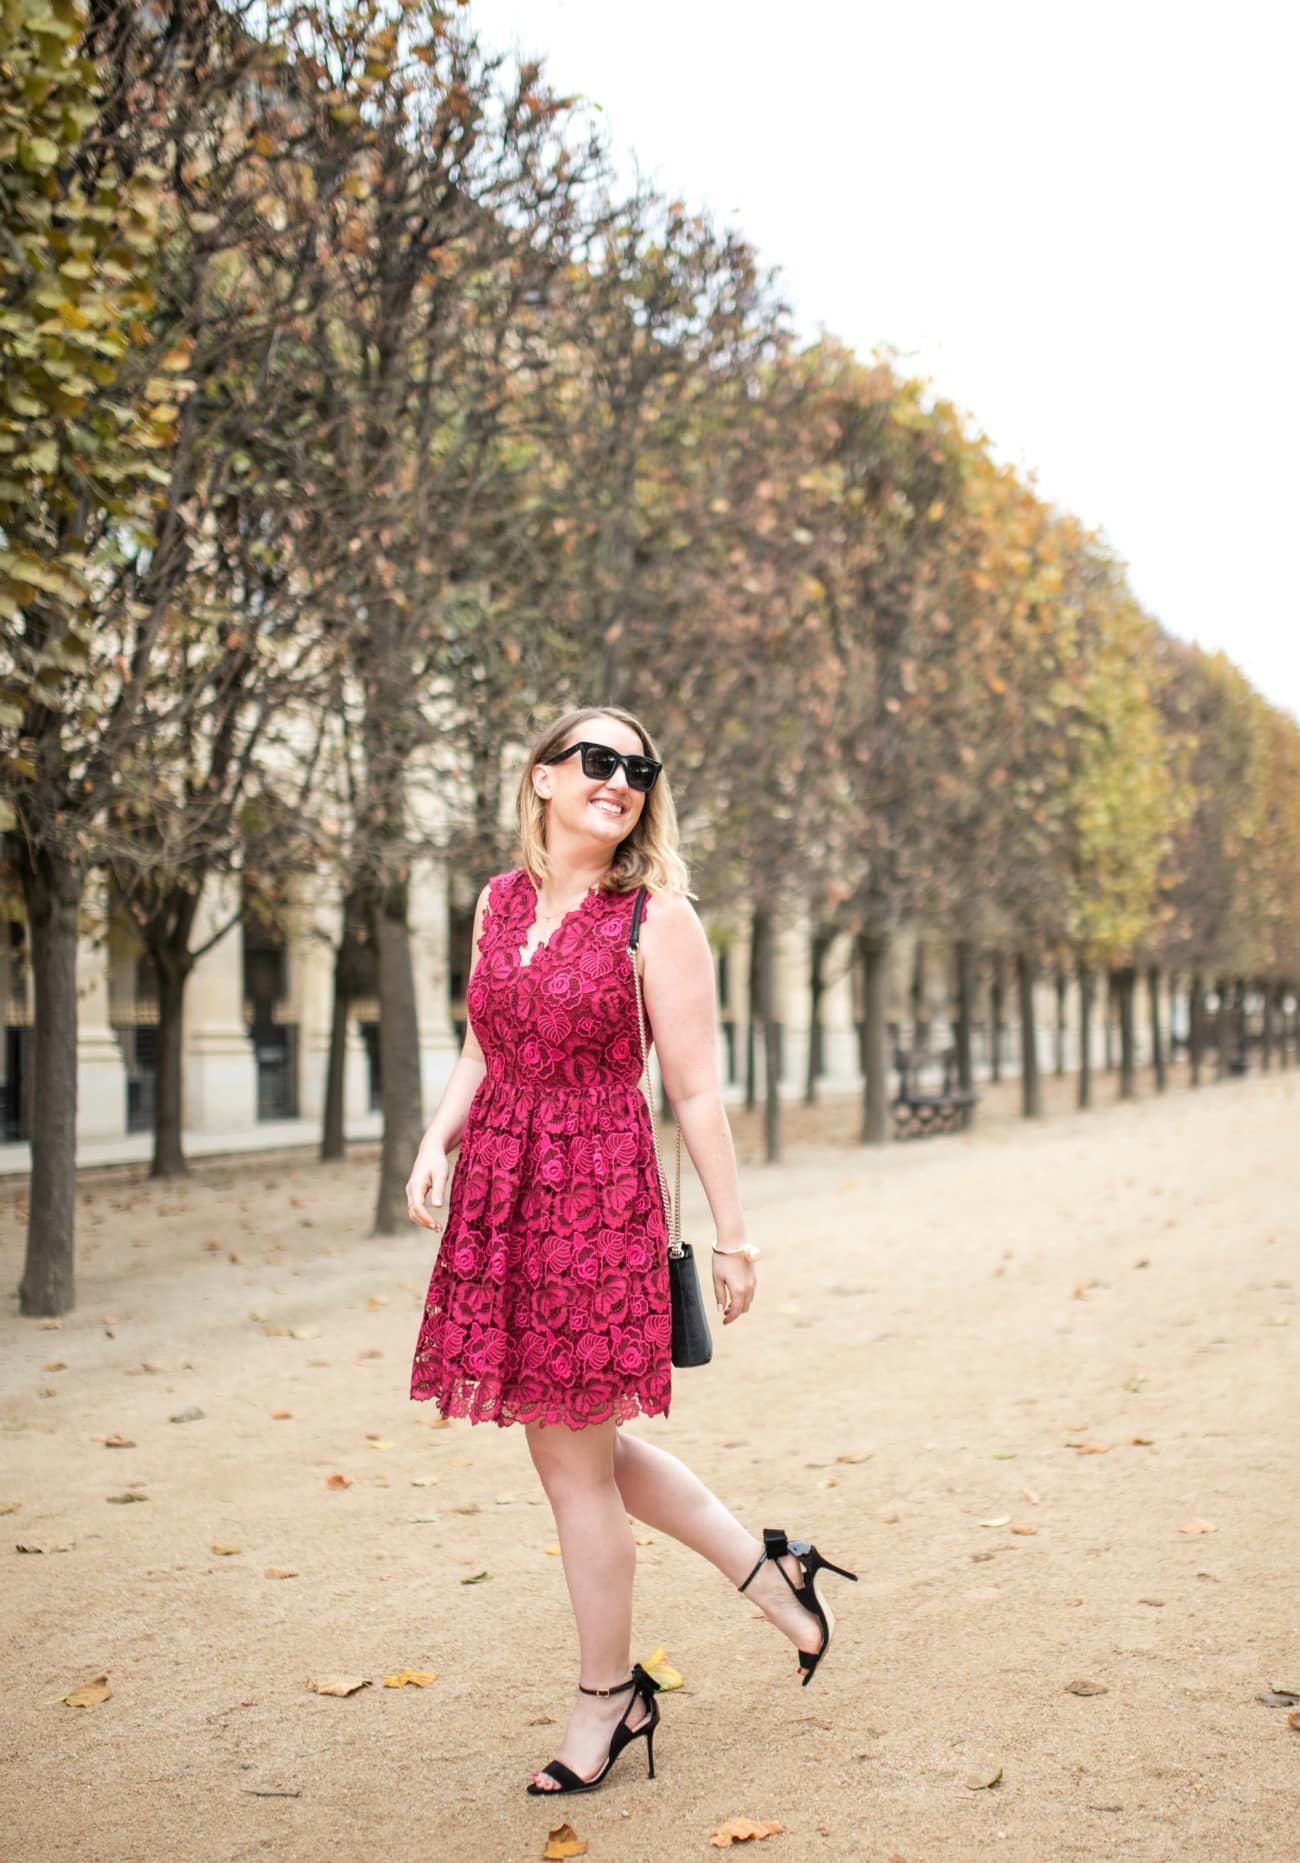 Meghan Donovan in Paris I wit & whimsy